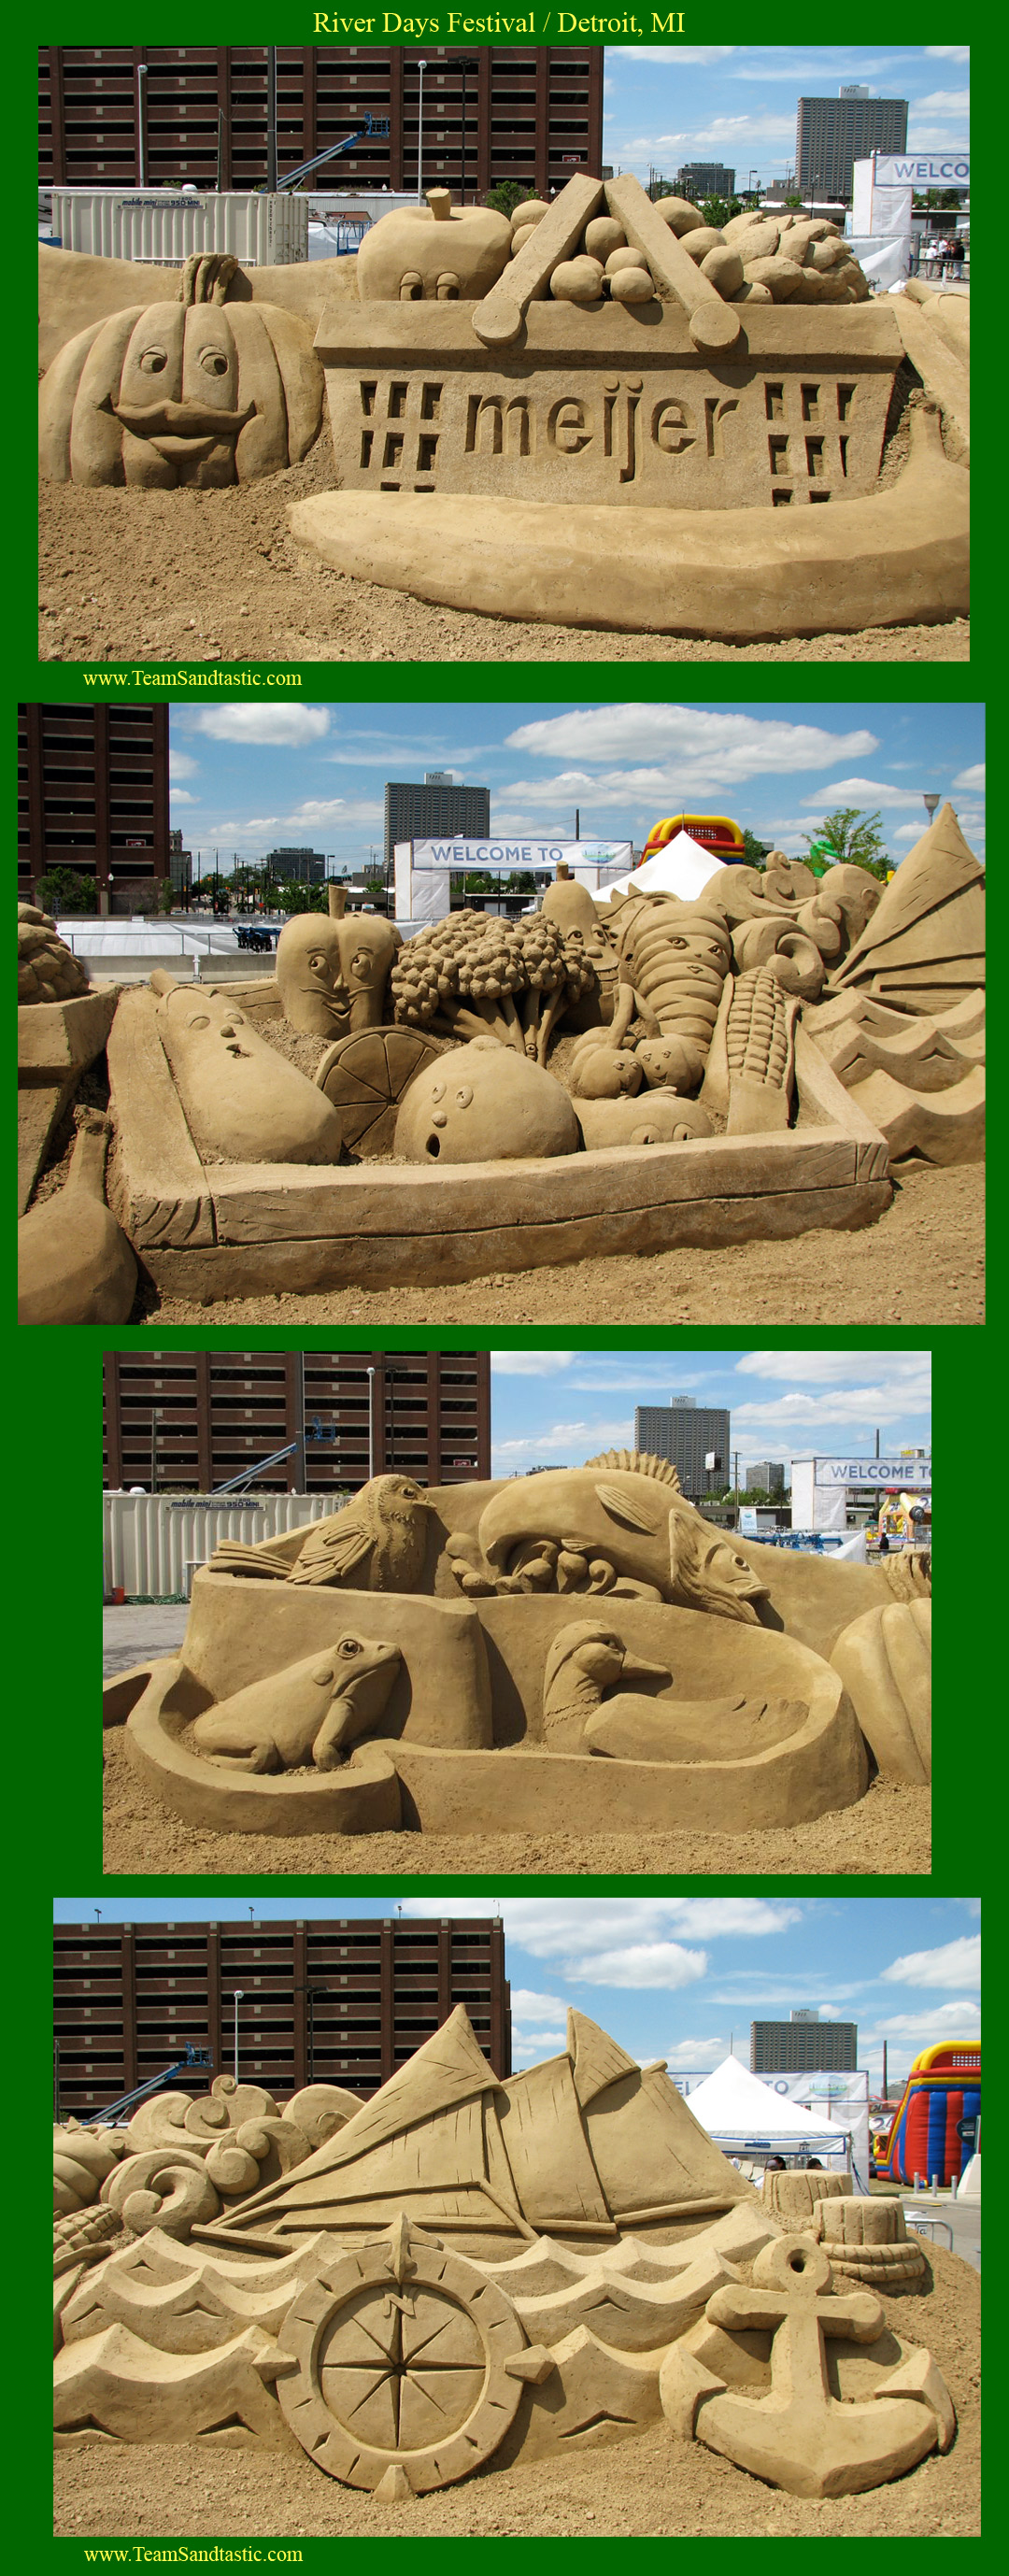 Riverdays Sand Sculpture